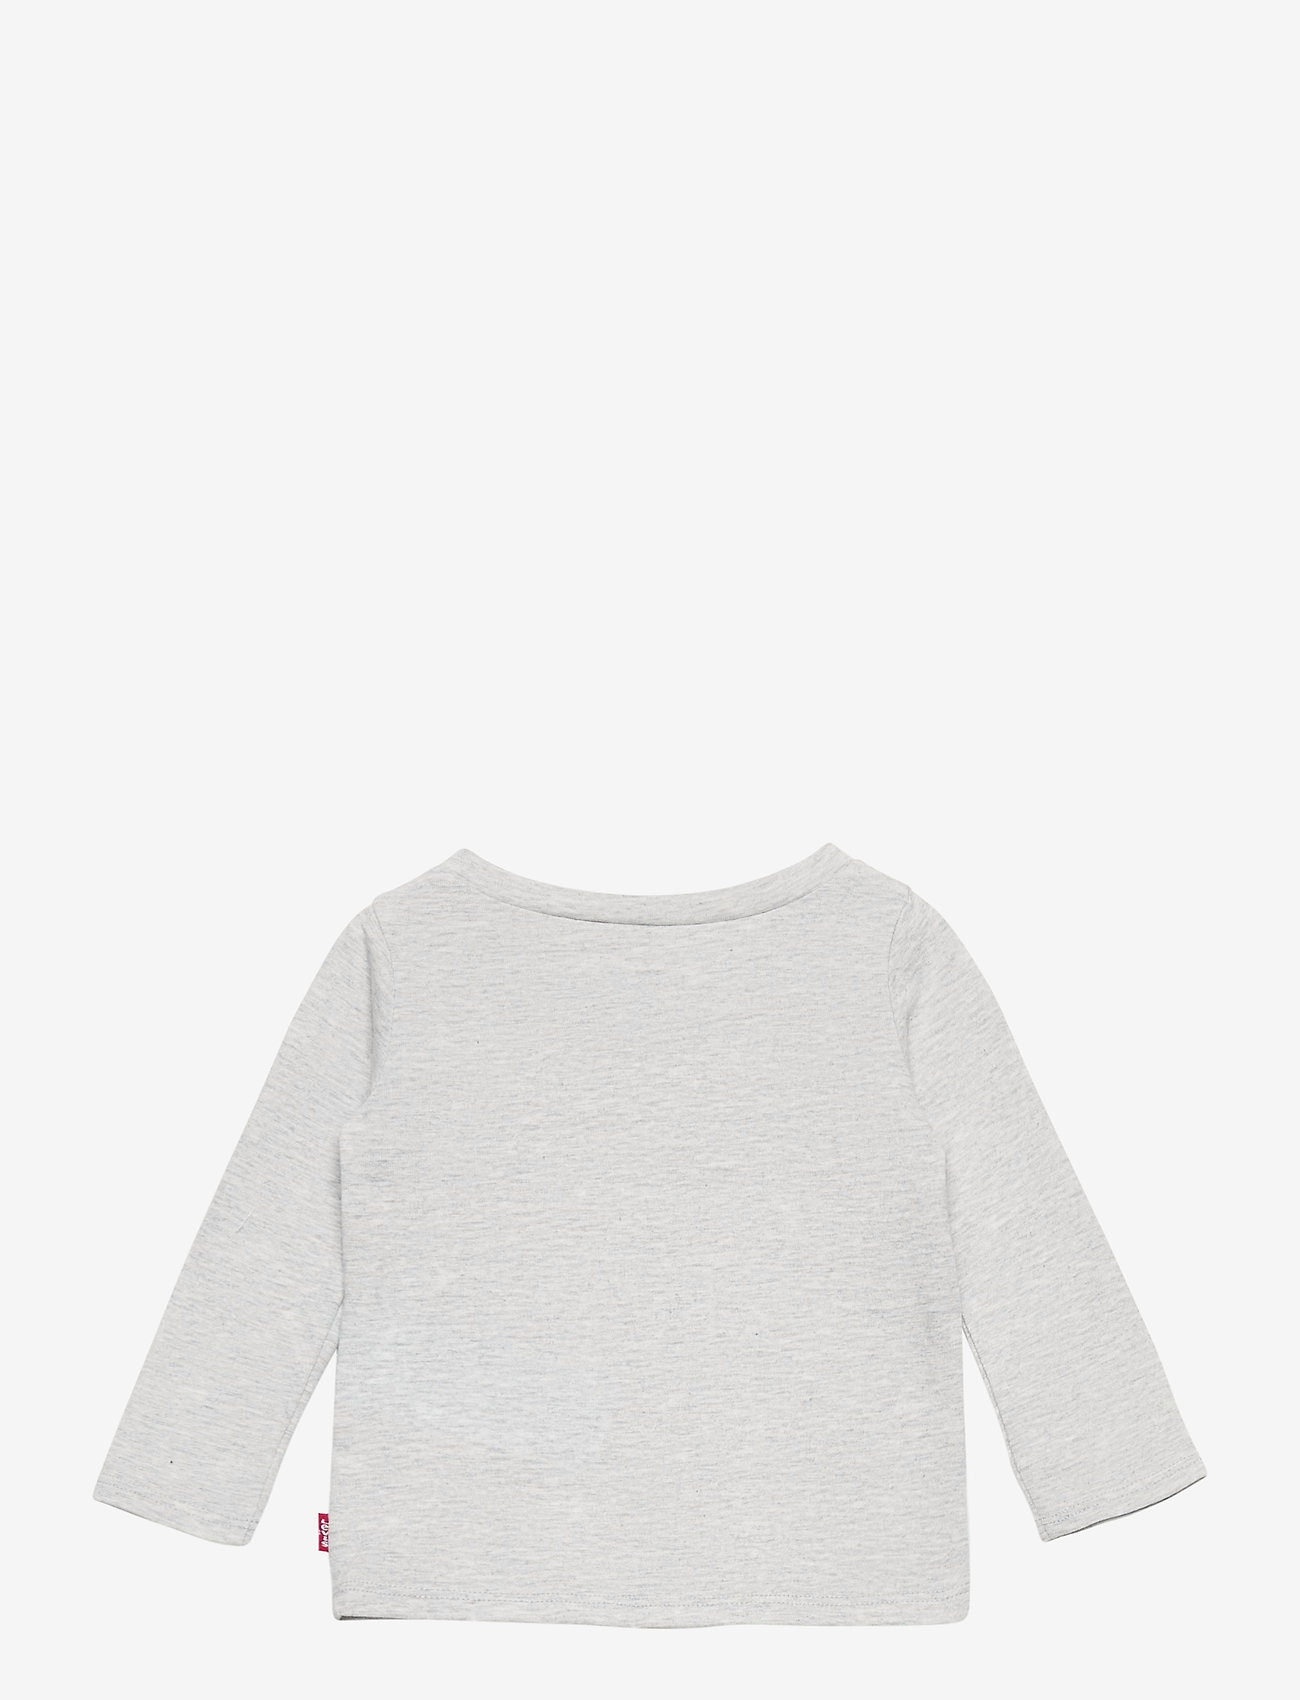 Levi's - LVG LS GRAPHIC TEE - långärmade t-shirts - light gray heather - 1